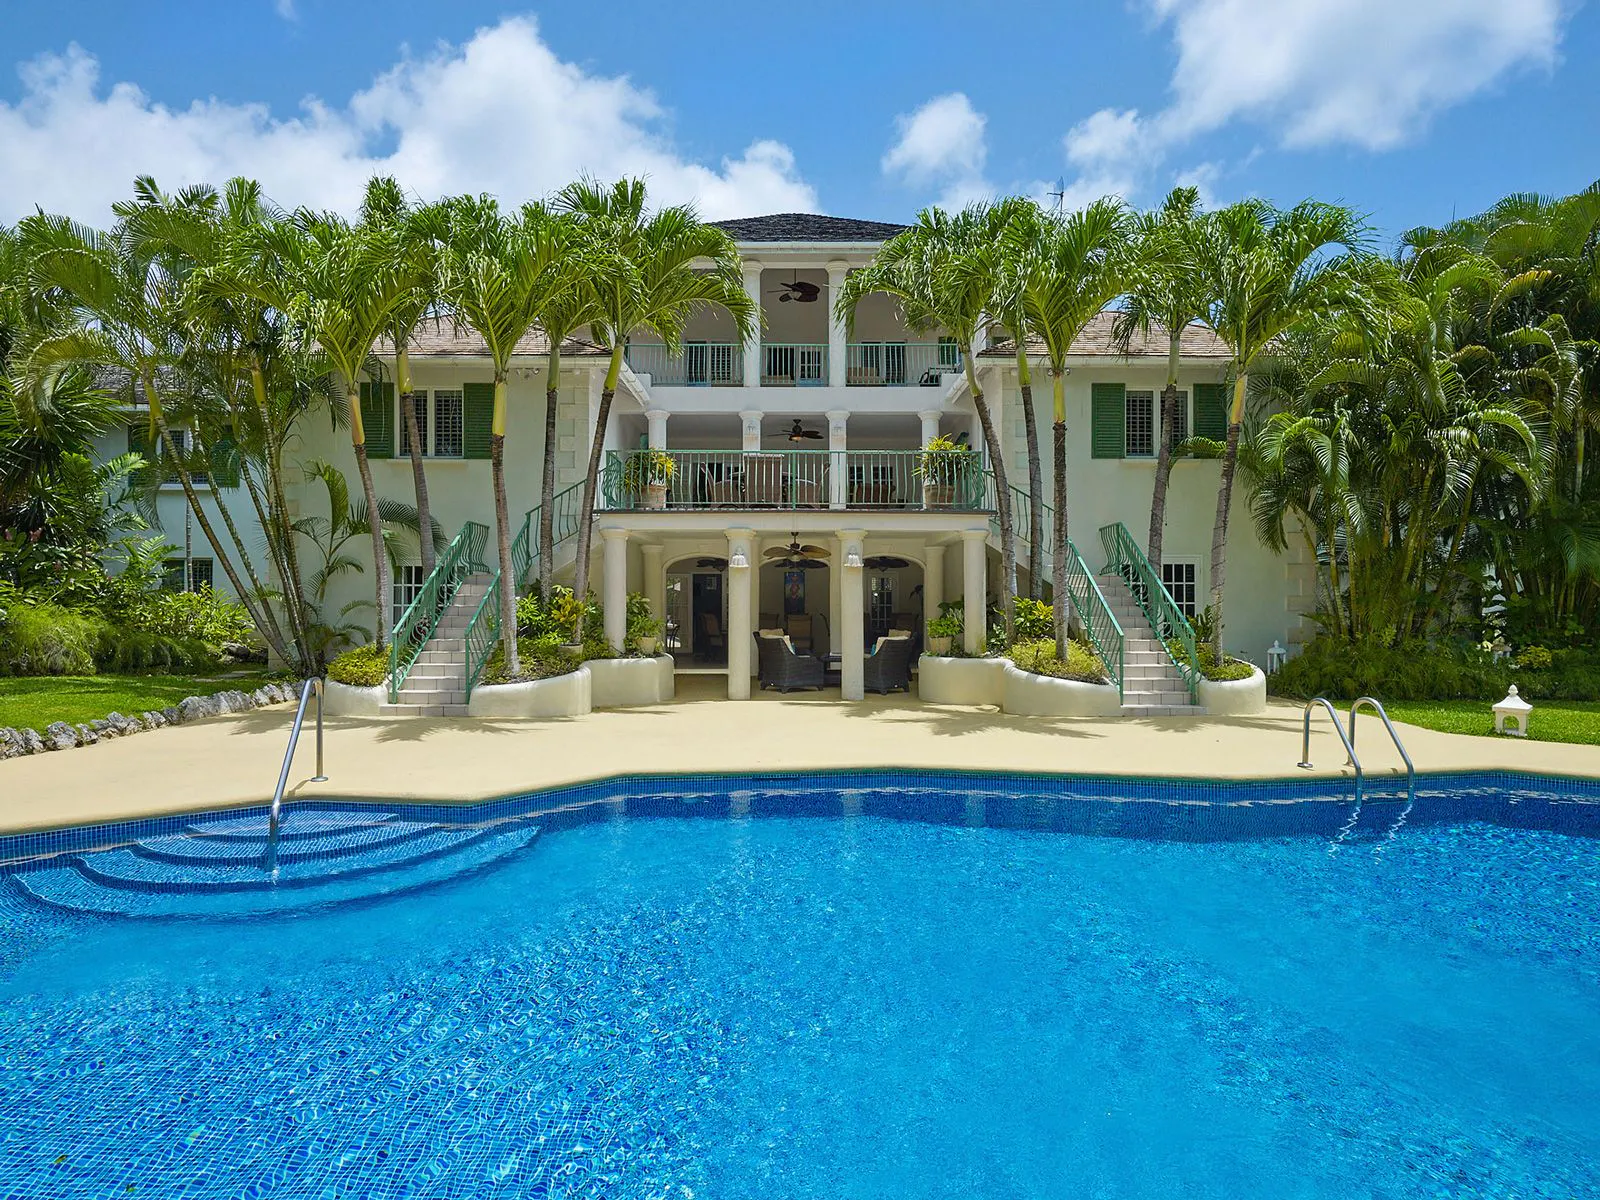 Aliseo 9 bedroom villa in the Caribbean